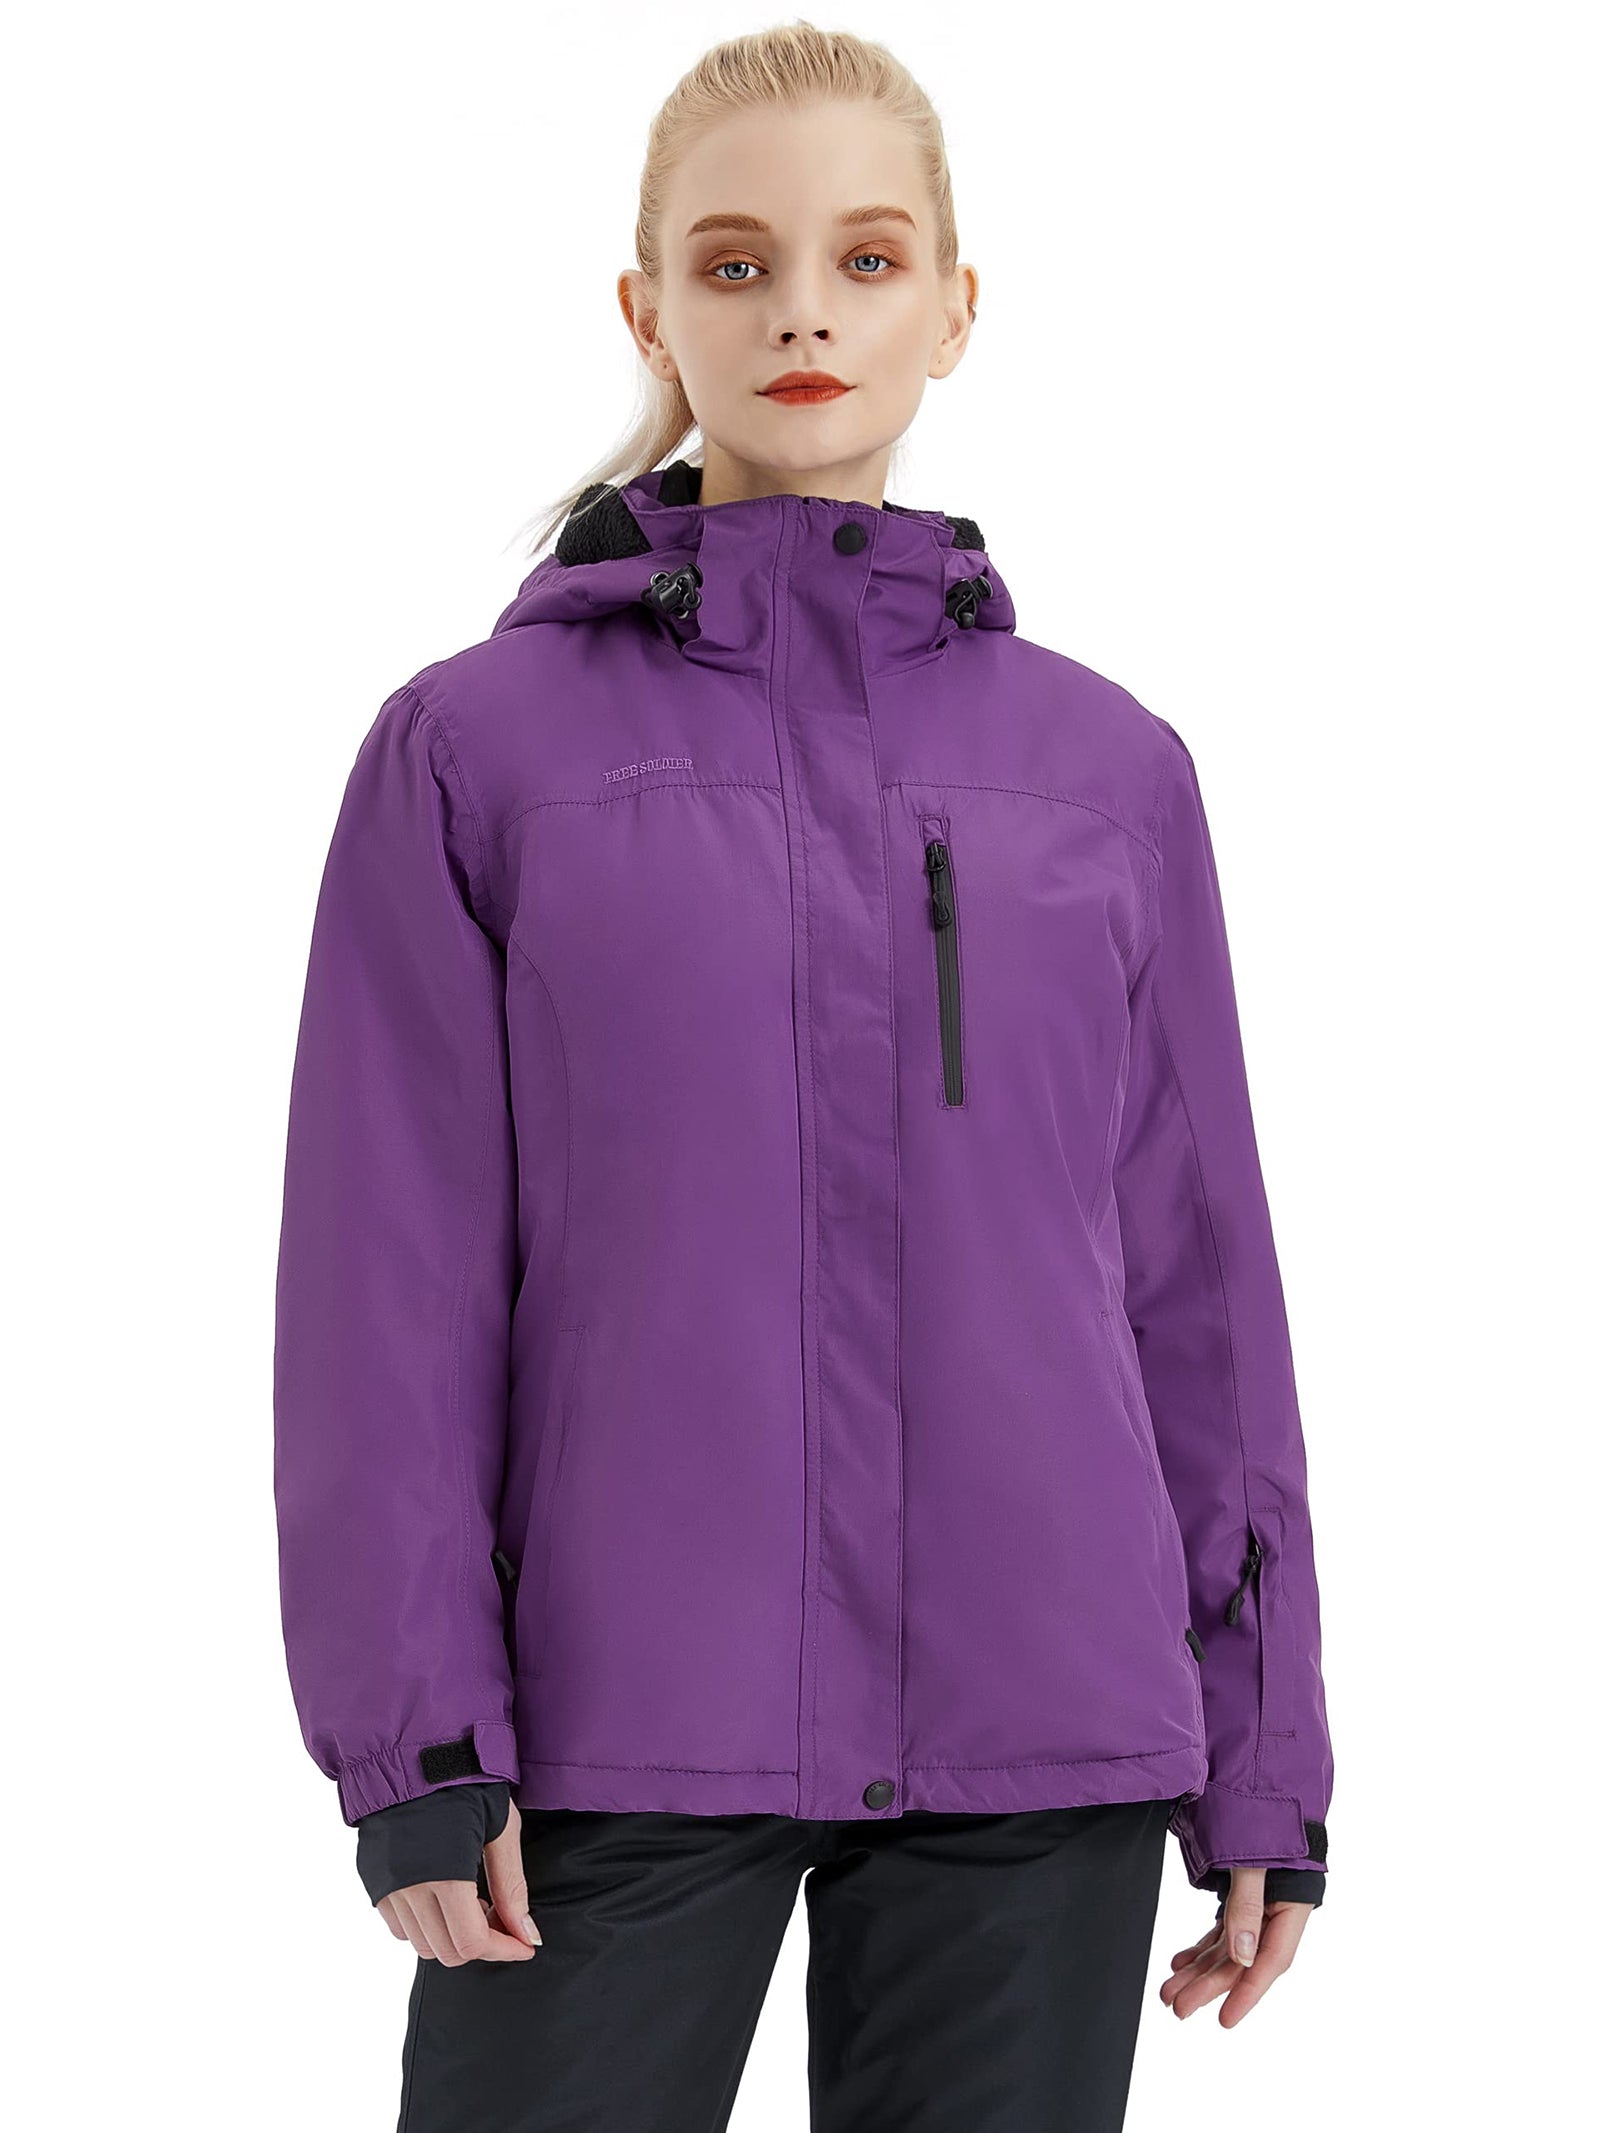 XFLWAM Women's Ski Snow Pants Waterproof Wind Lightweight Thermal Pants  Outdoor Hiking Mountain Softshell with Belt Purple XXL 